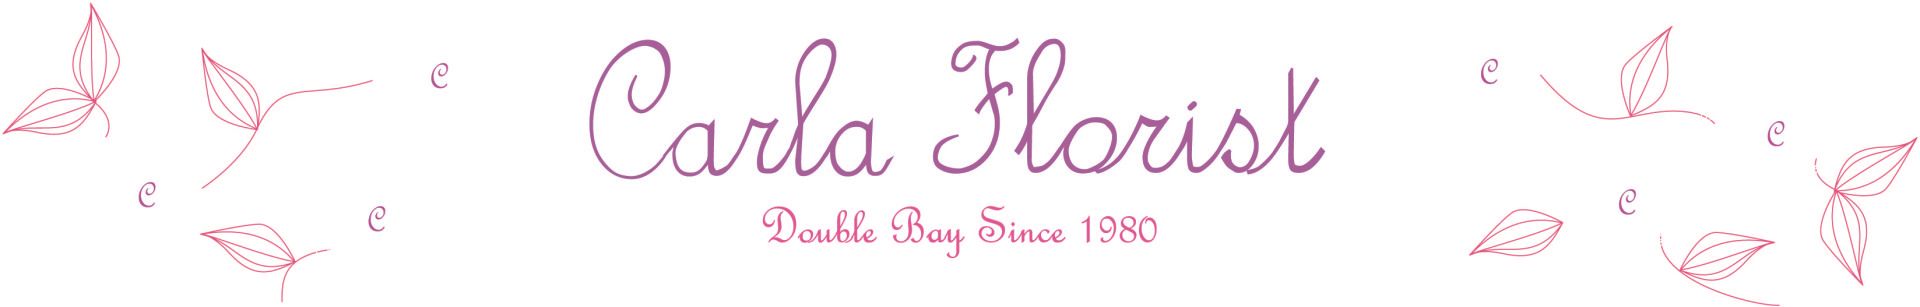 Carla Florist - logo